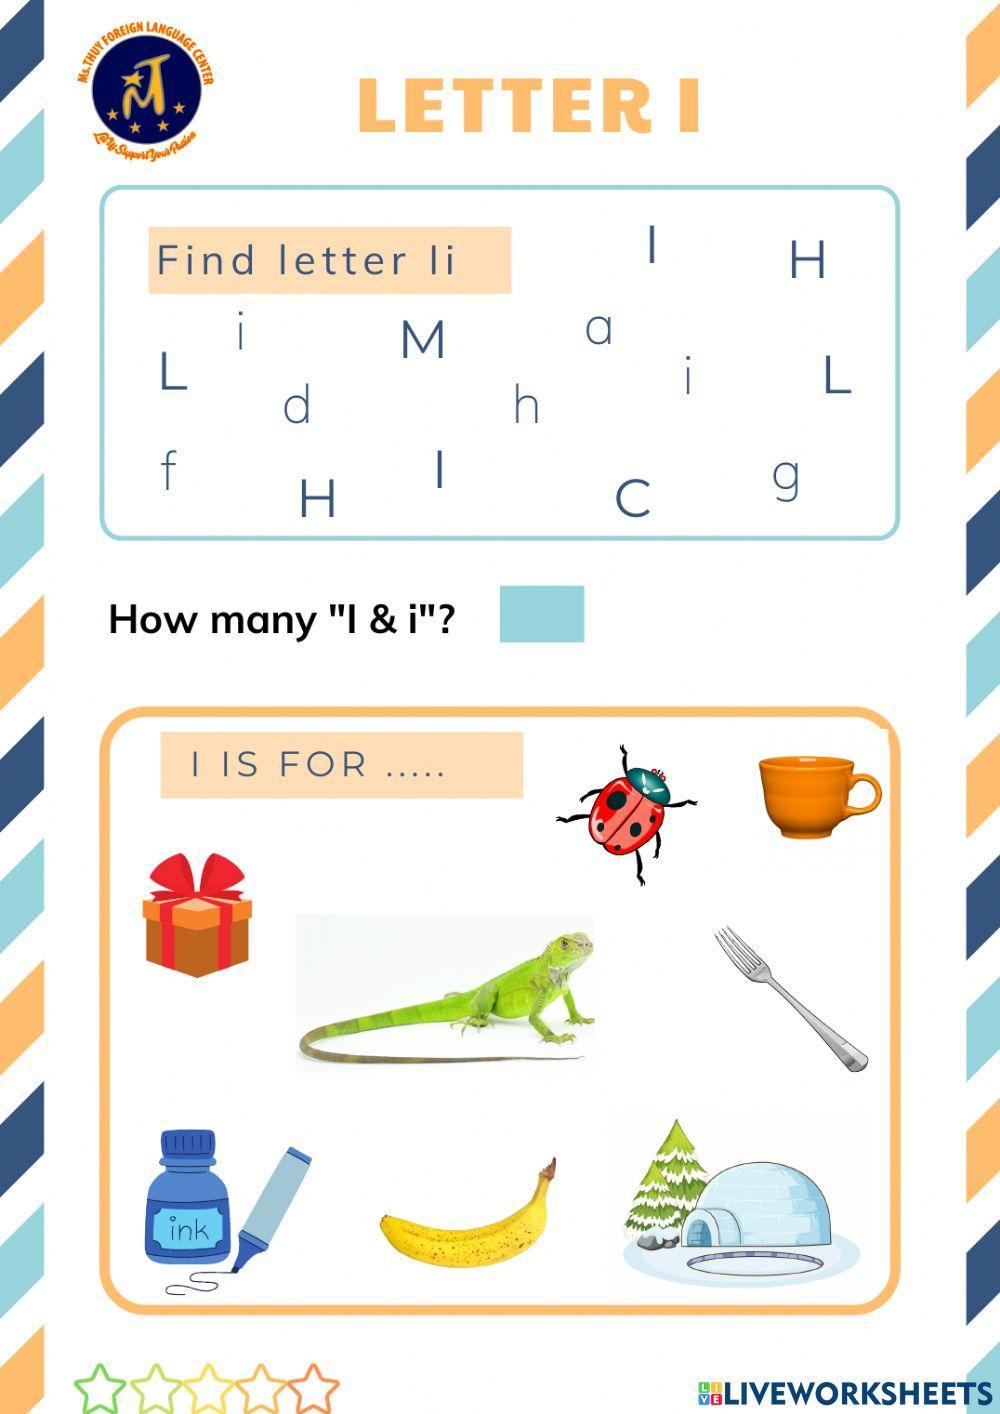 Find letter Ii